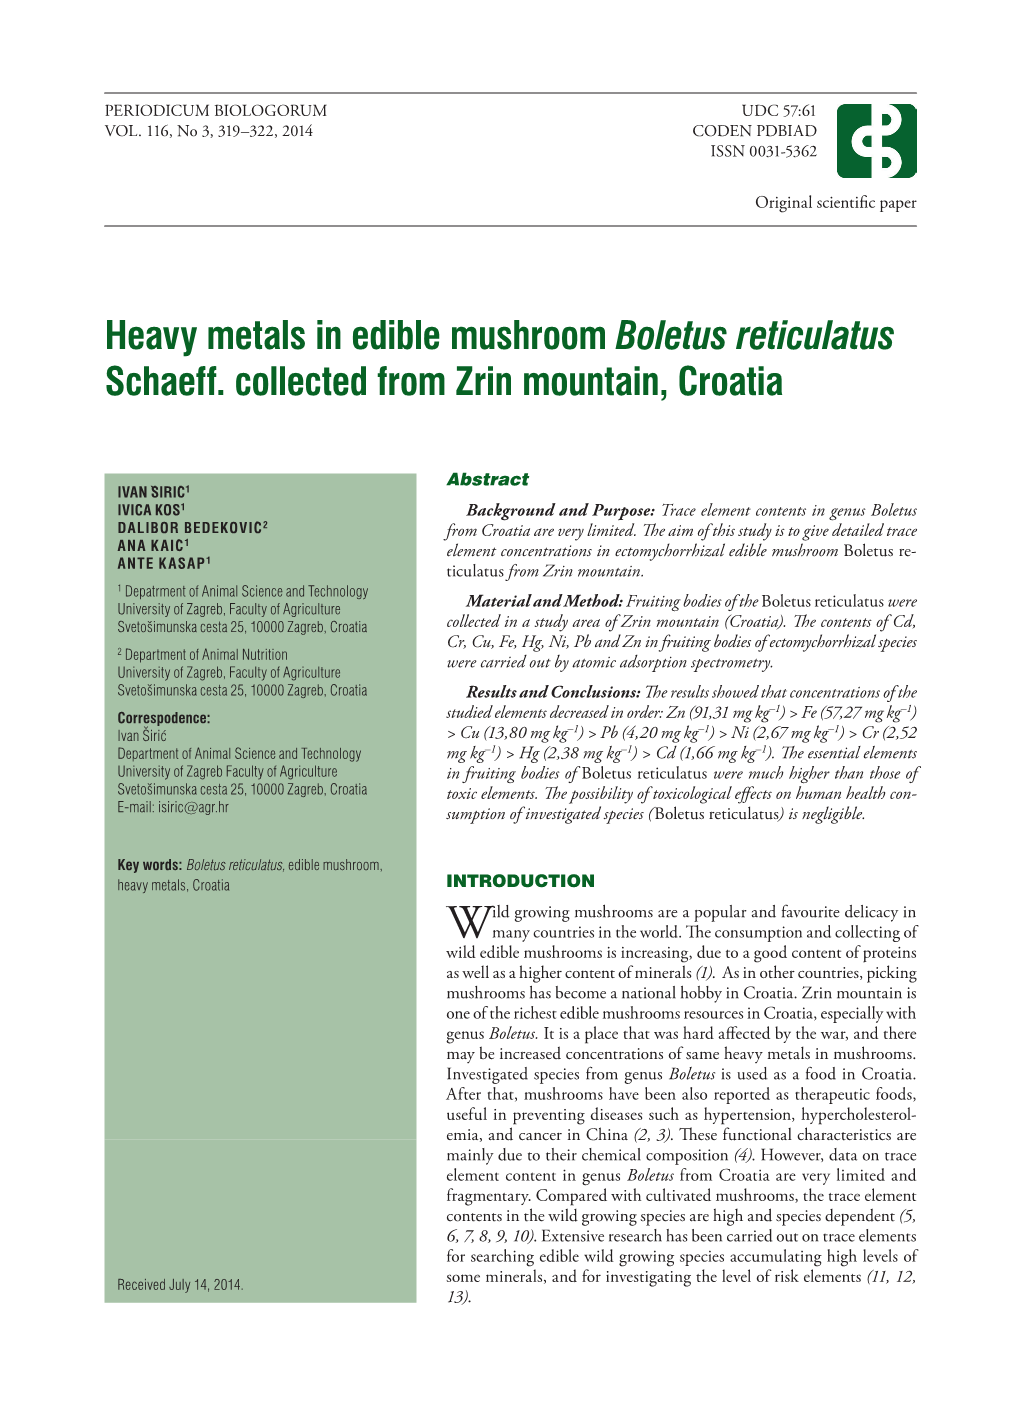 Heavy Metals in Edible Mushroom Boletus Reticulatus Schaeff